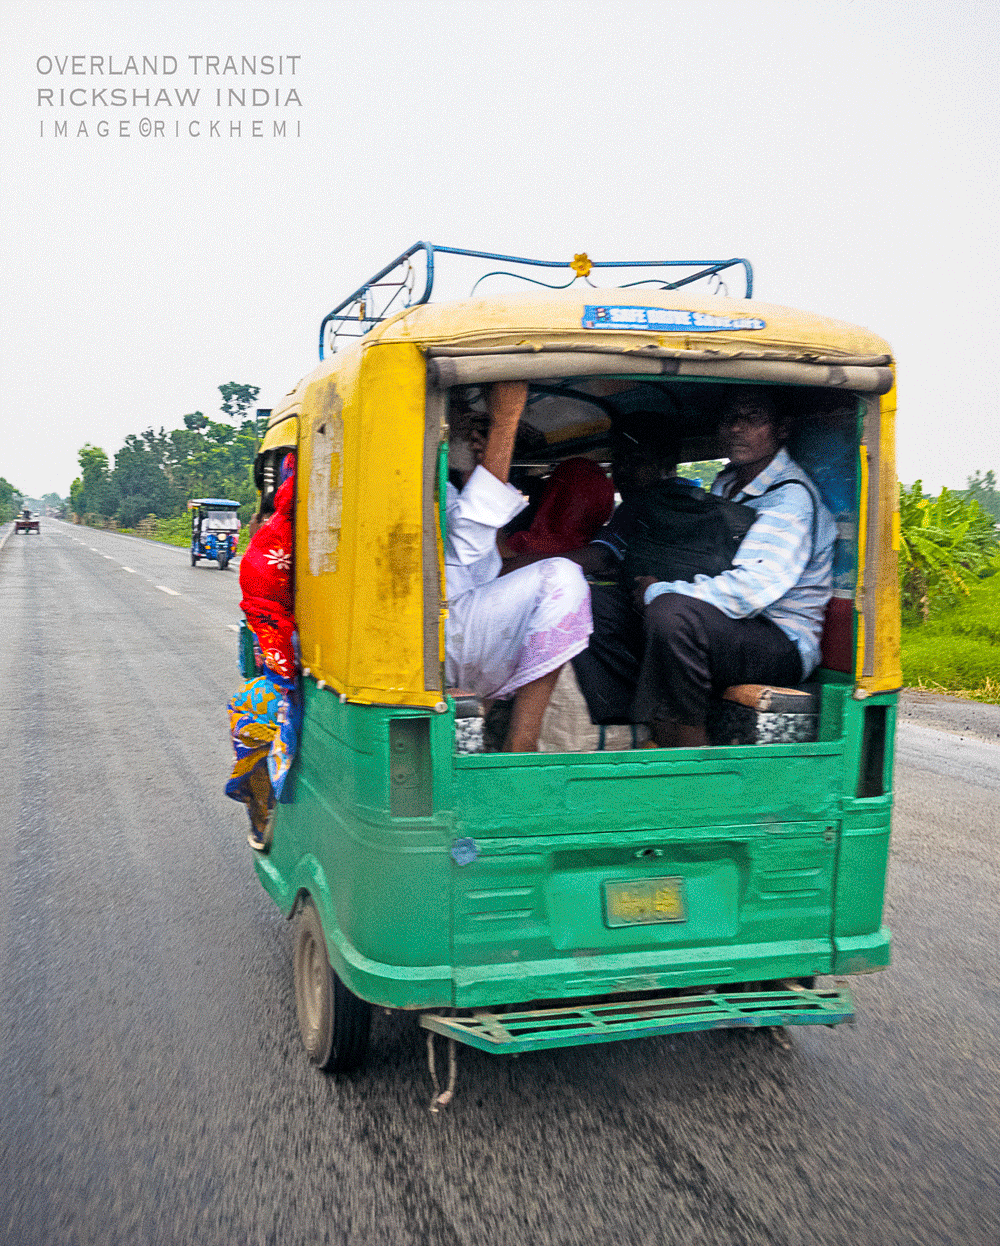 solo overland travel, on the go in transit mode, motor rickshaw India, image by Rick Hemi 